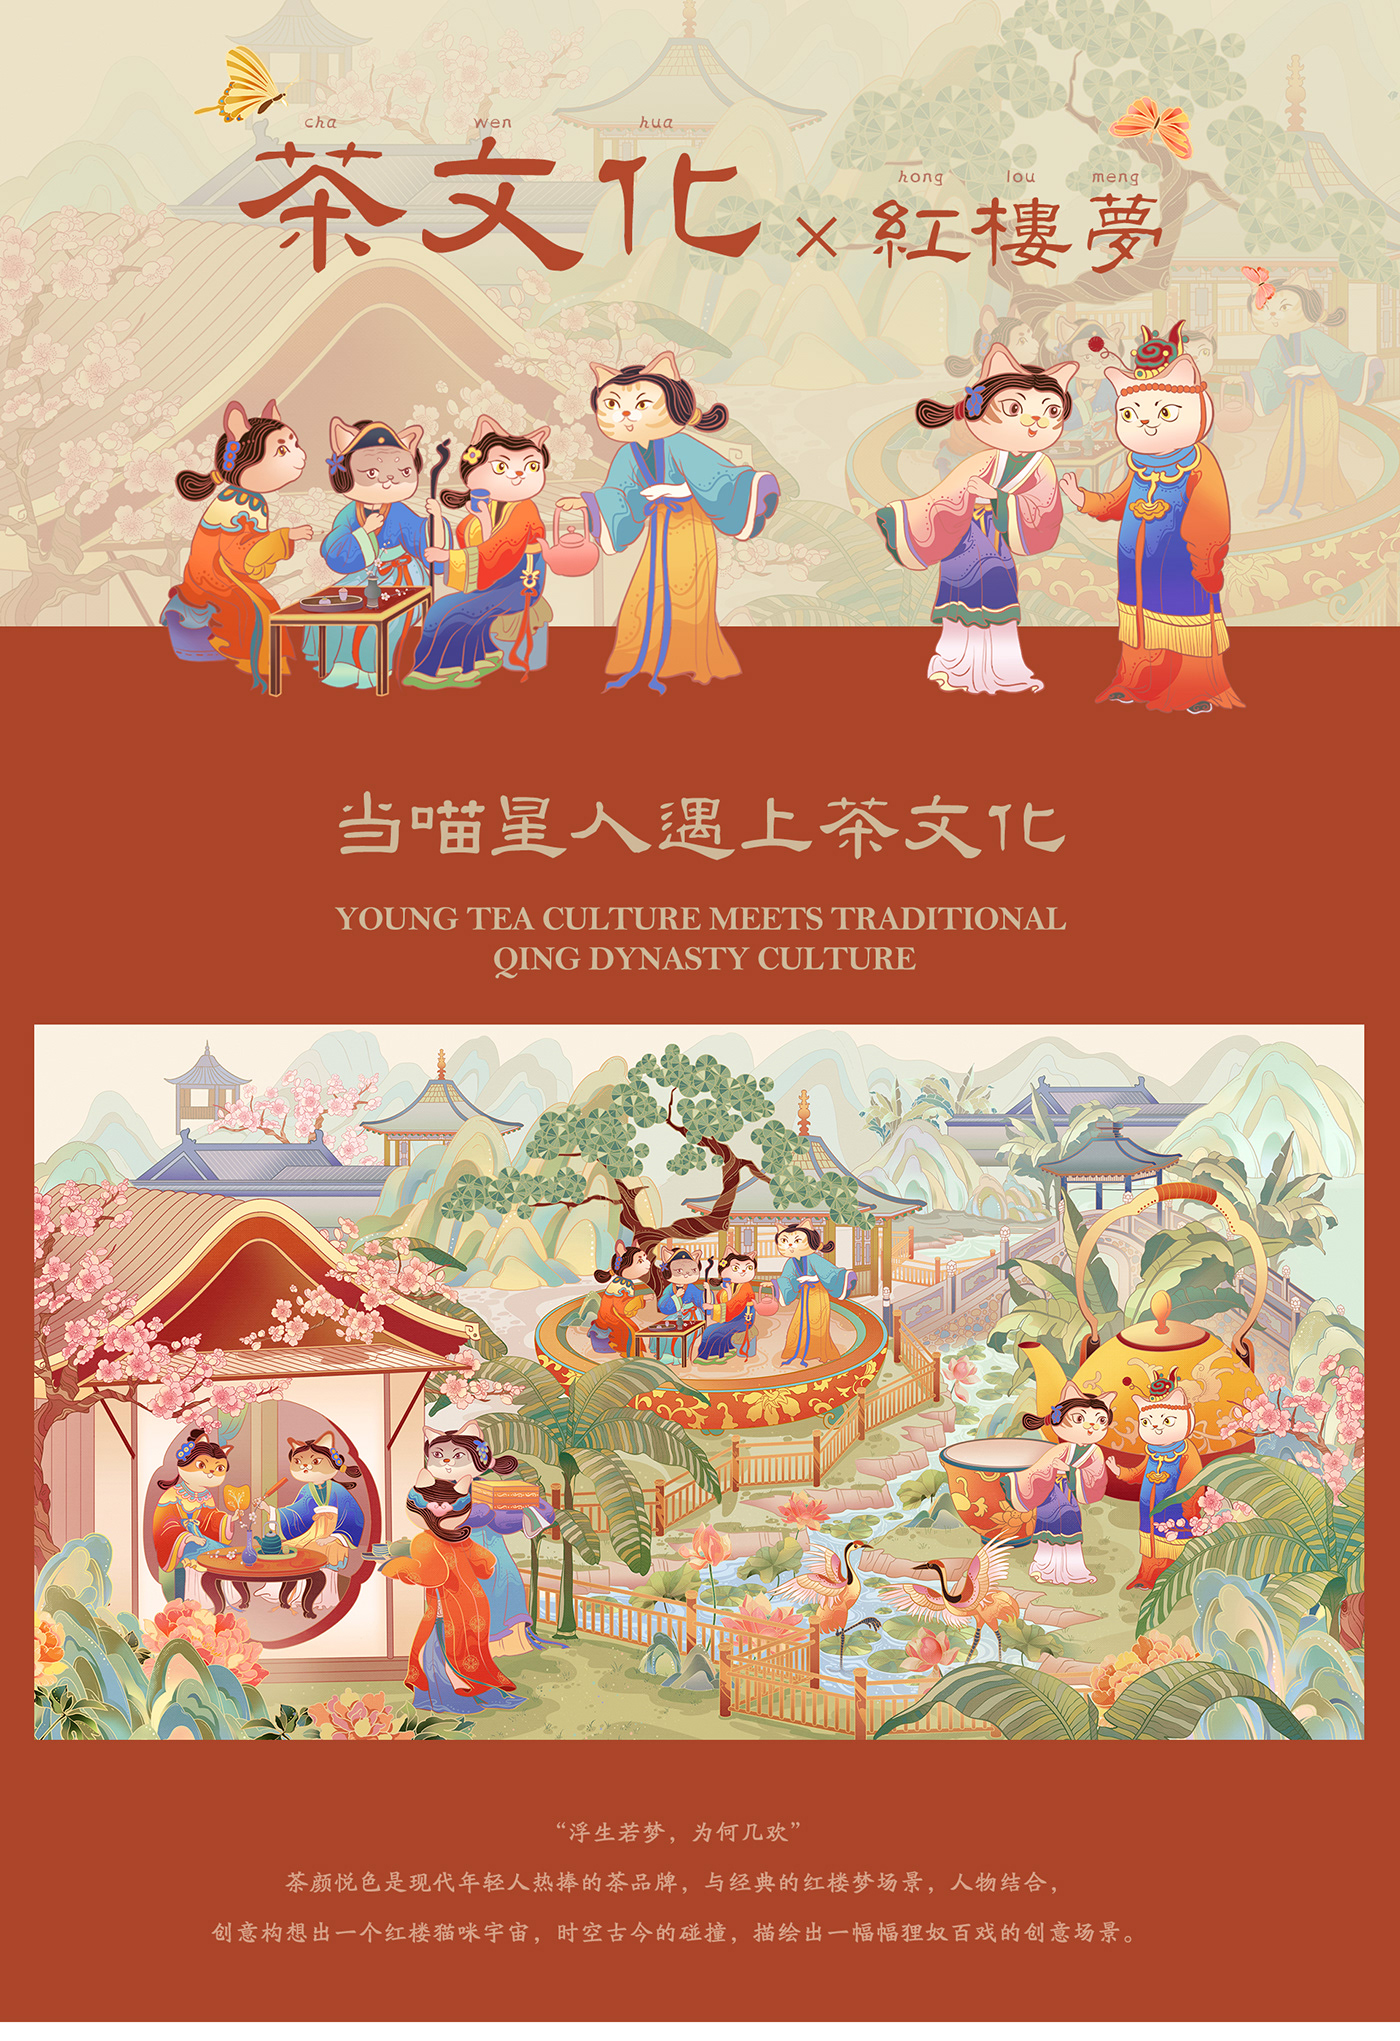 illustrations illustration design illustration art digital illustration commercial illustration China illustration 中国风插画 国潮插画